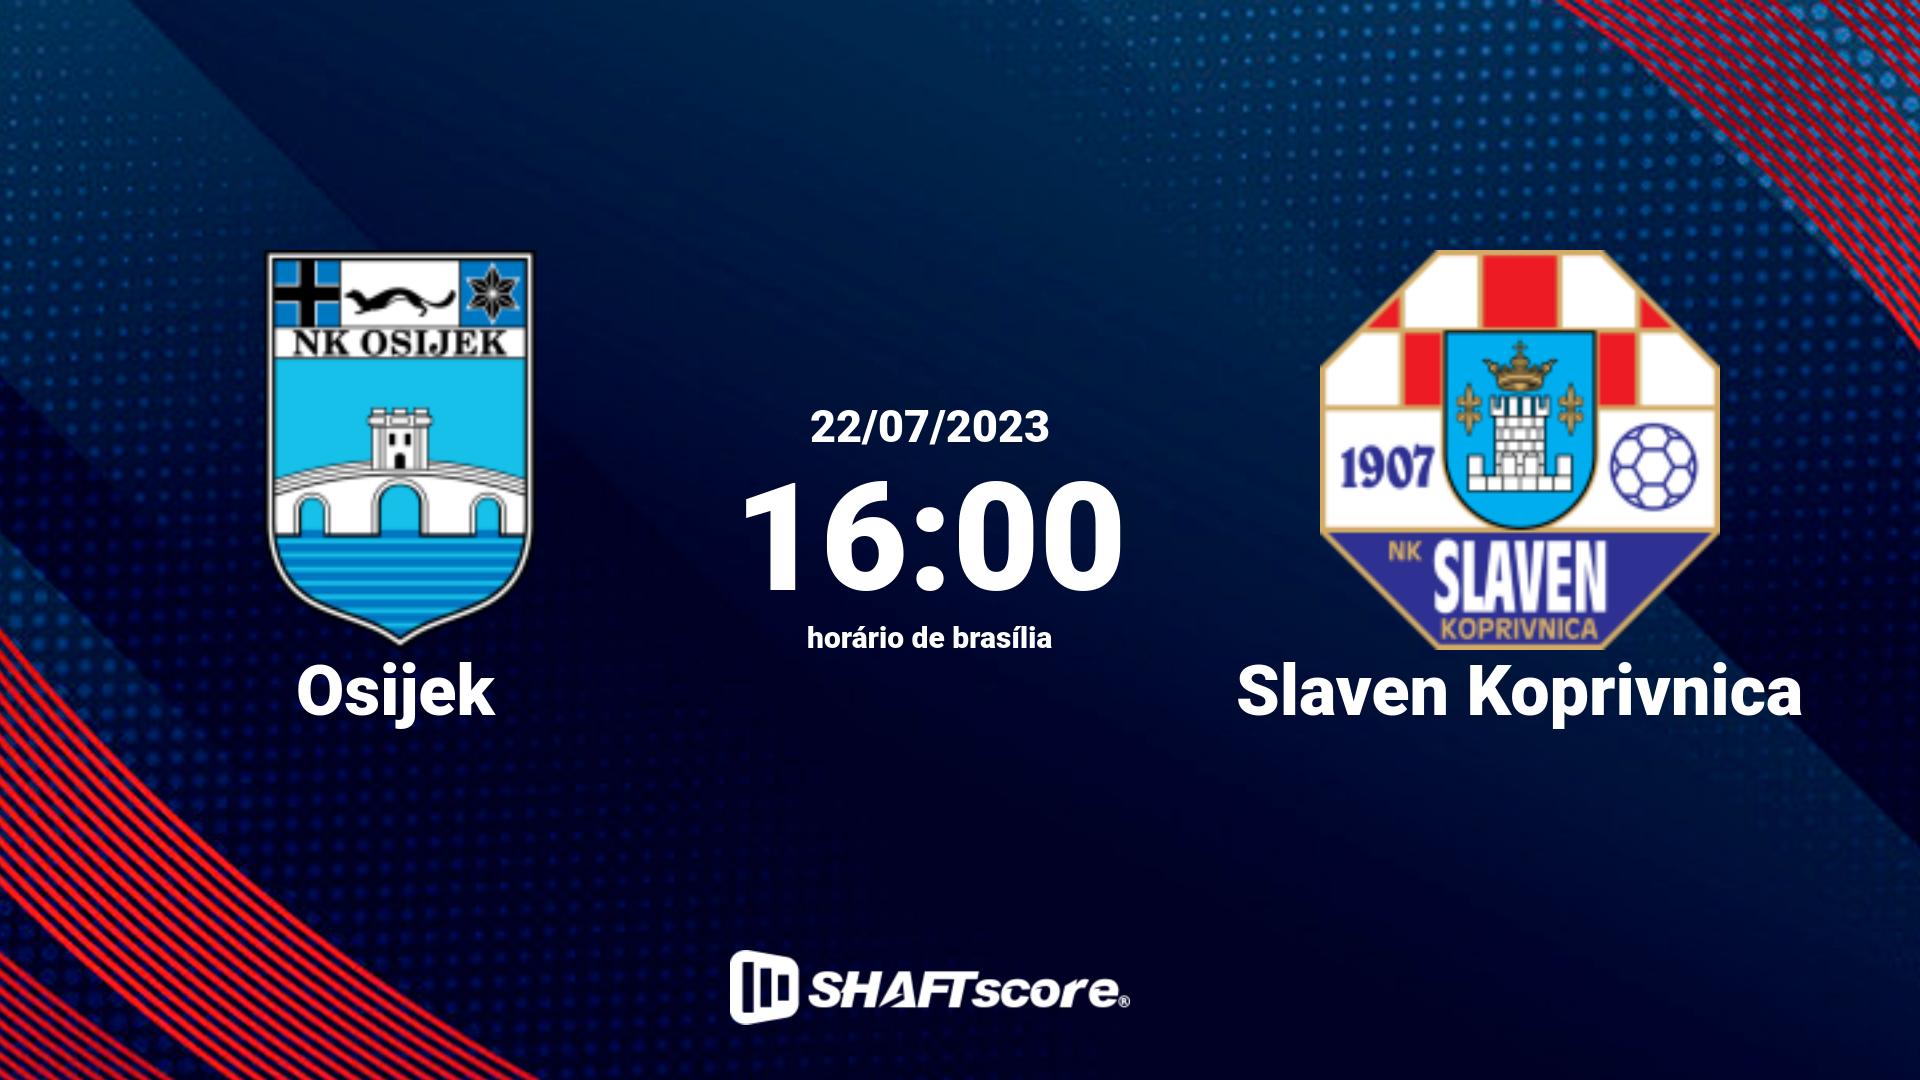 Estatísticas do jogo Osijek vs Slaven Koprivnica 22.07 16:00